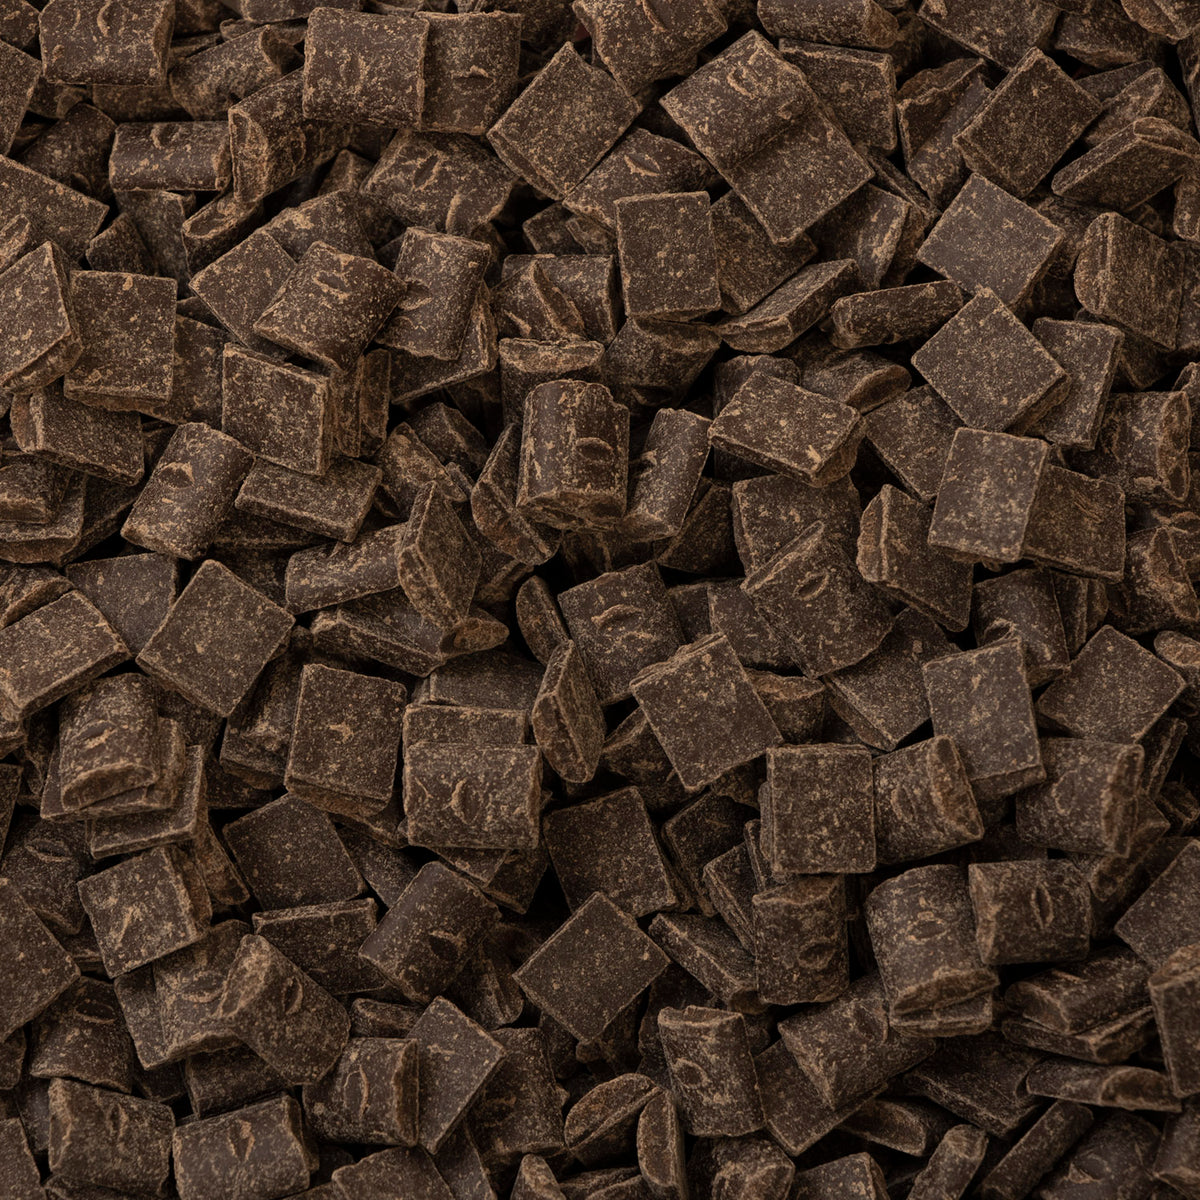 Organic dark 70% cacao Chocolate chunks – Prana Foods